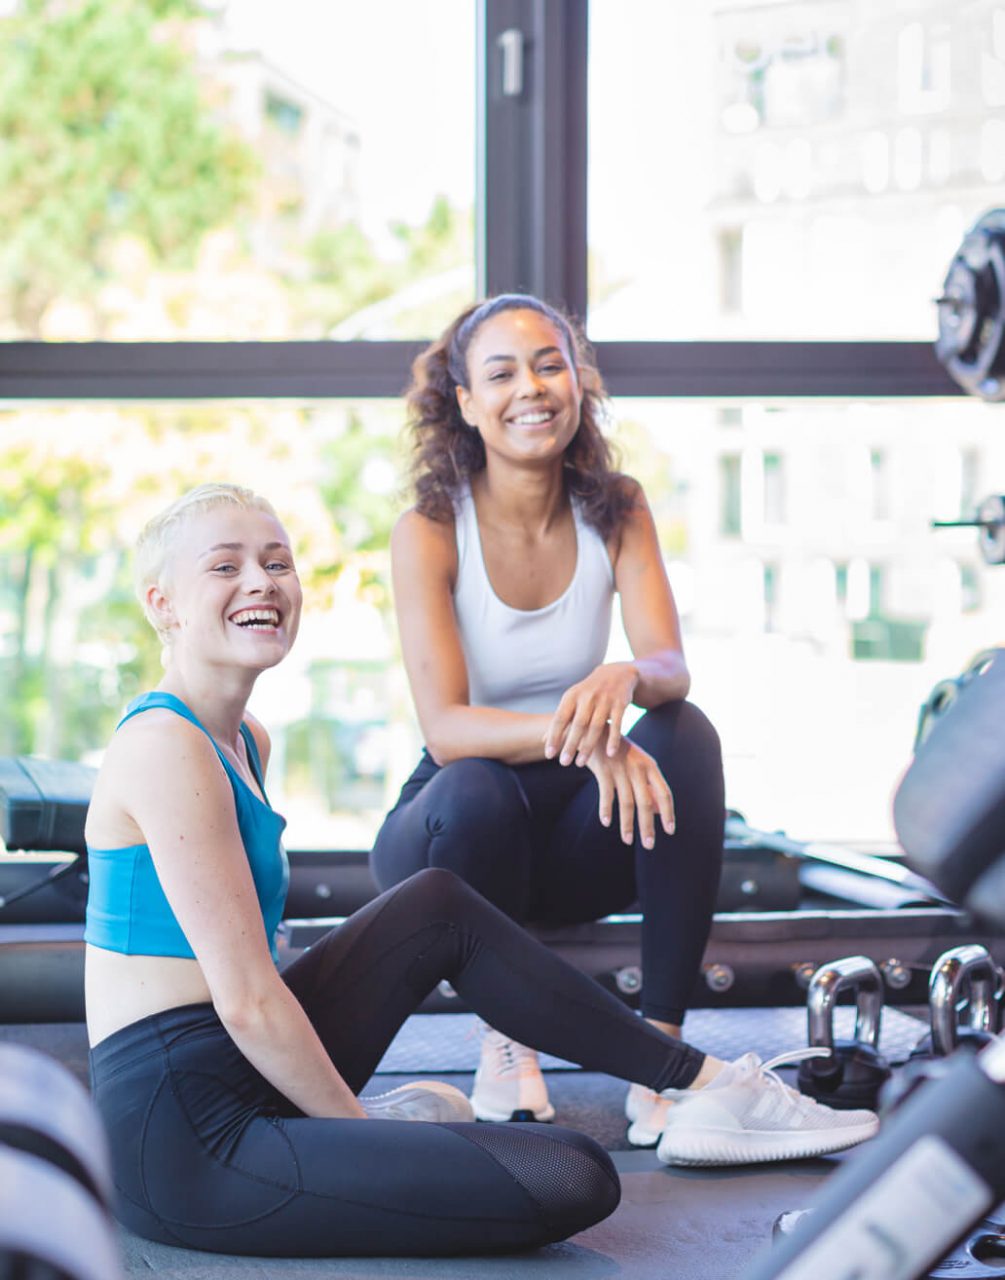 beneFit fitness wellness kurse investiere in dich monatlich kuendbar 1